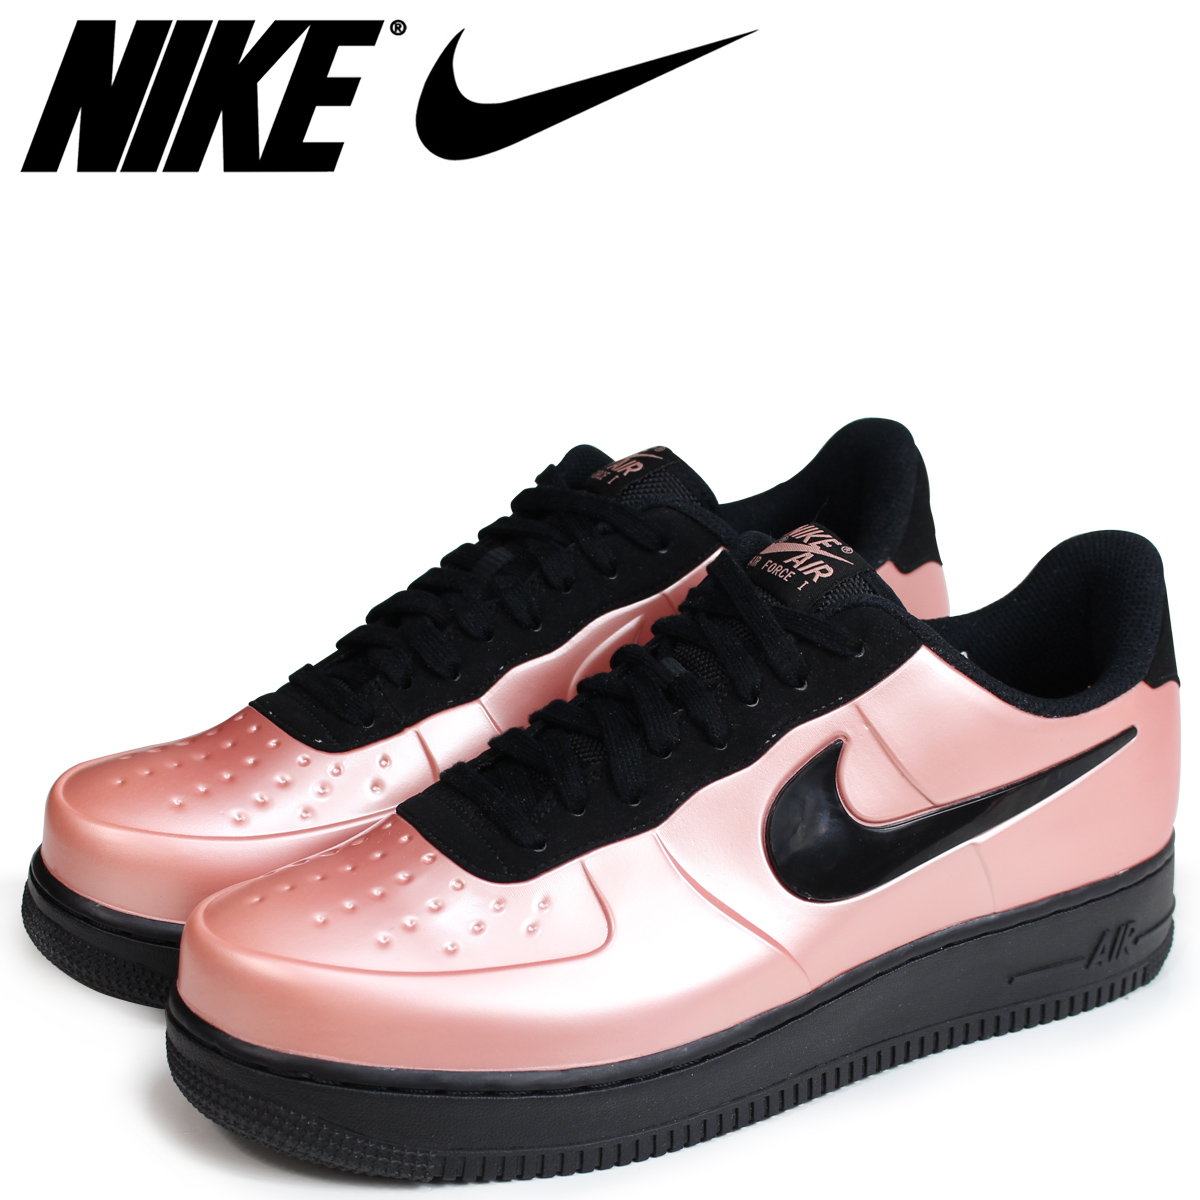 nike air force 1 foamposite pink